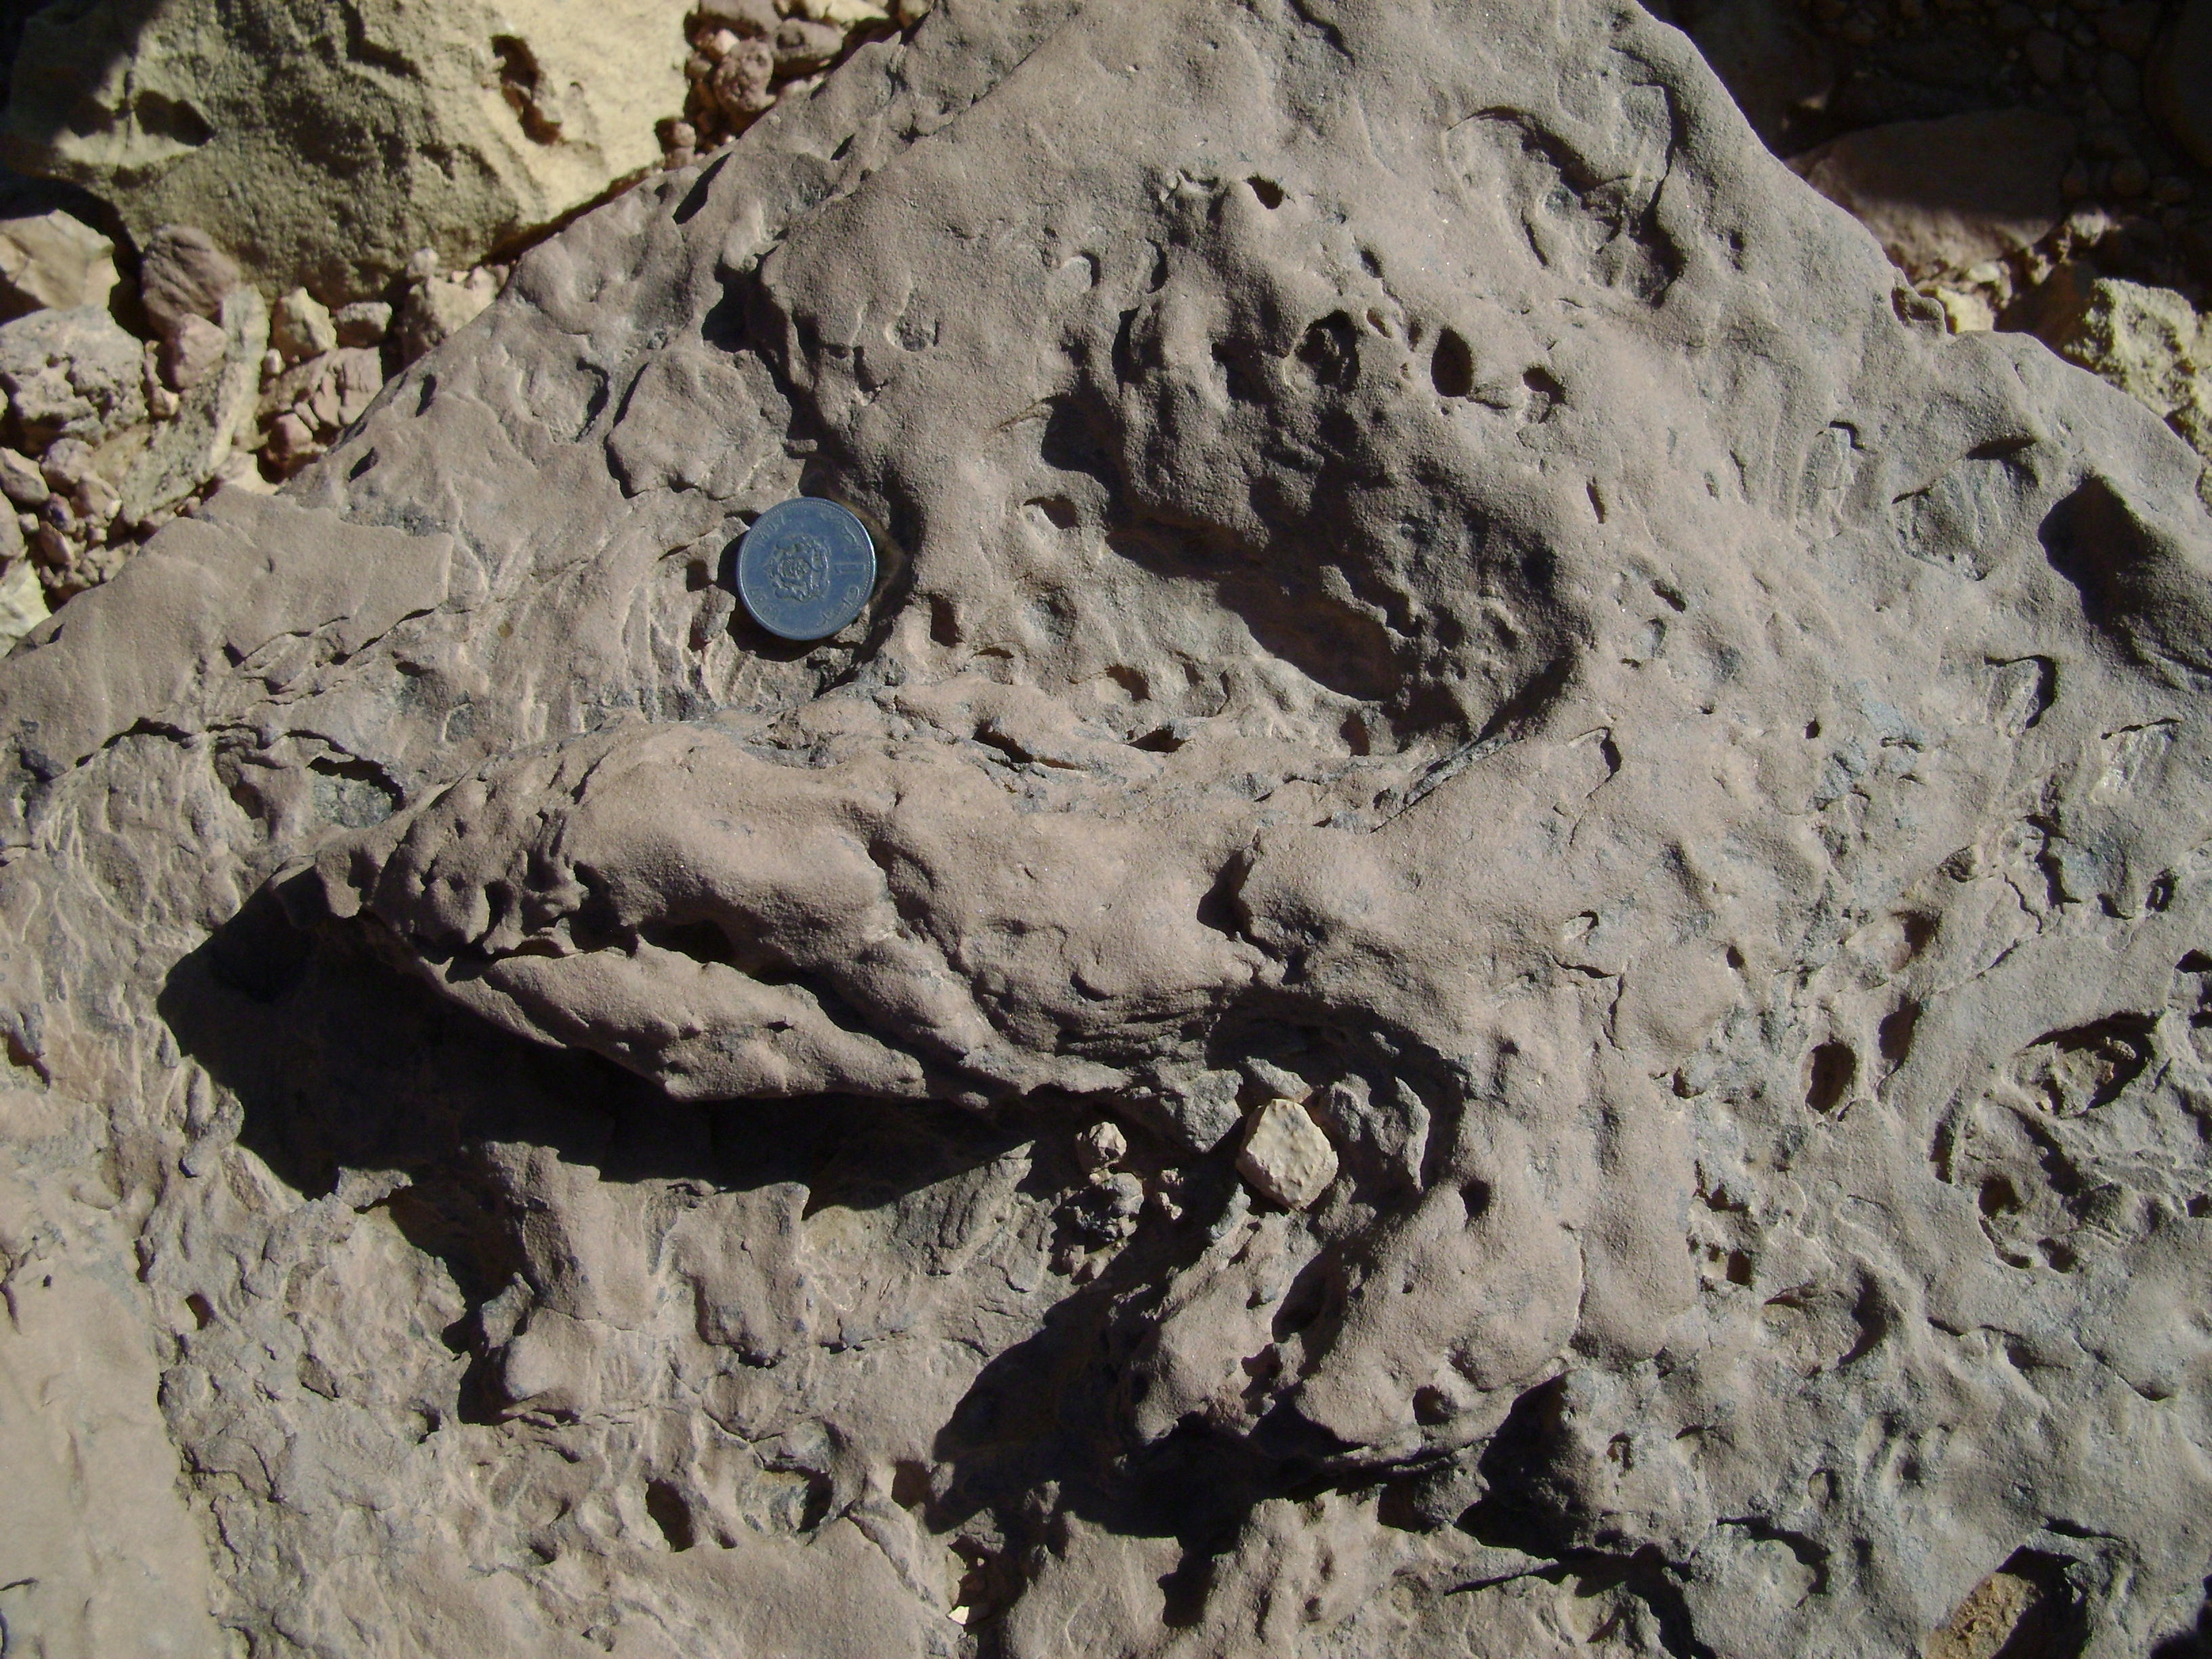 A three-toed dinosaur track from a predatory dinosaur. Photo: Nizar Ibrahim